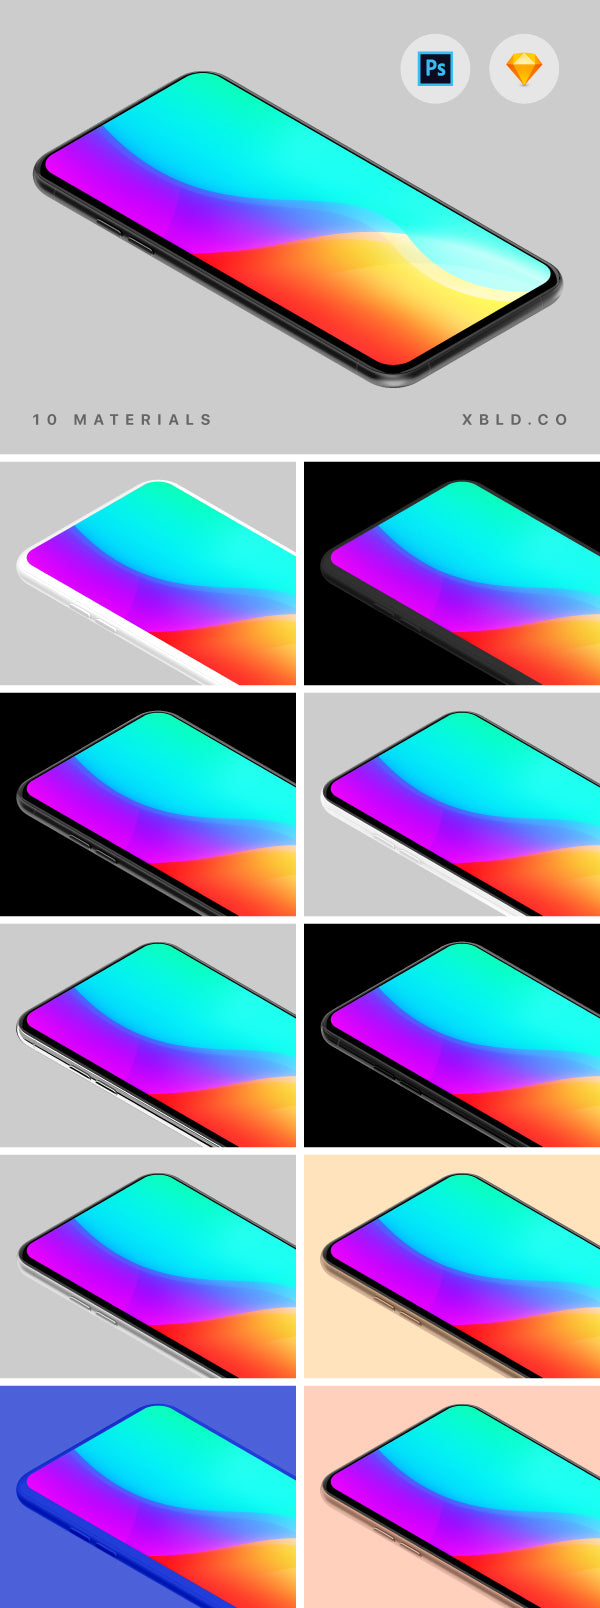 Free Generic Mobile Phone Mockup in 10 Colors